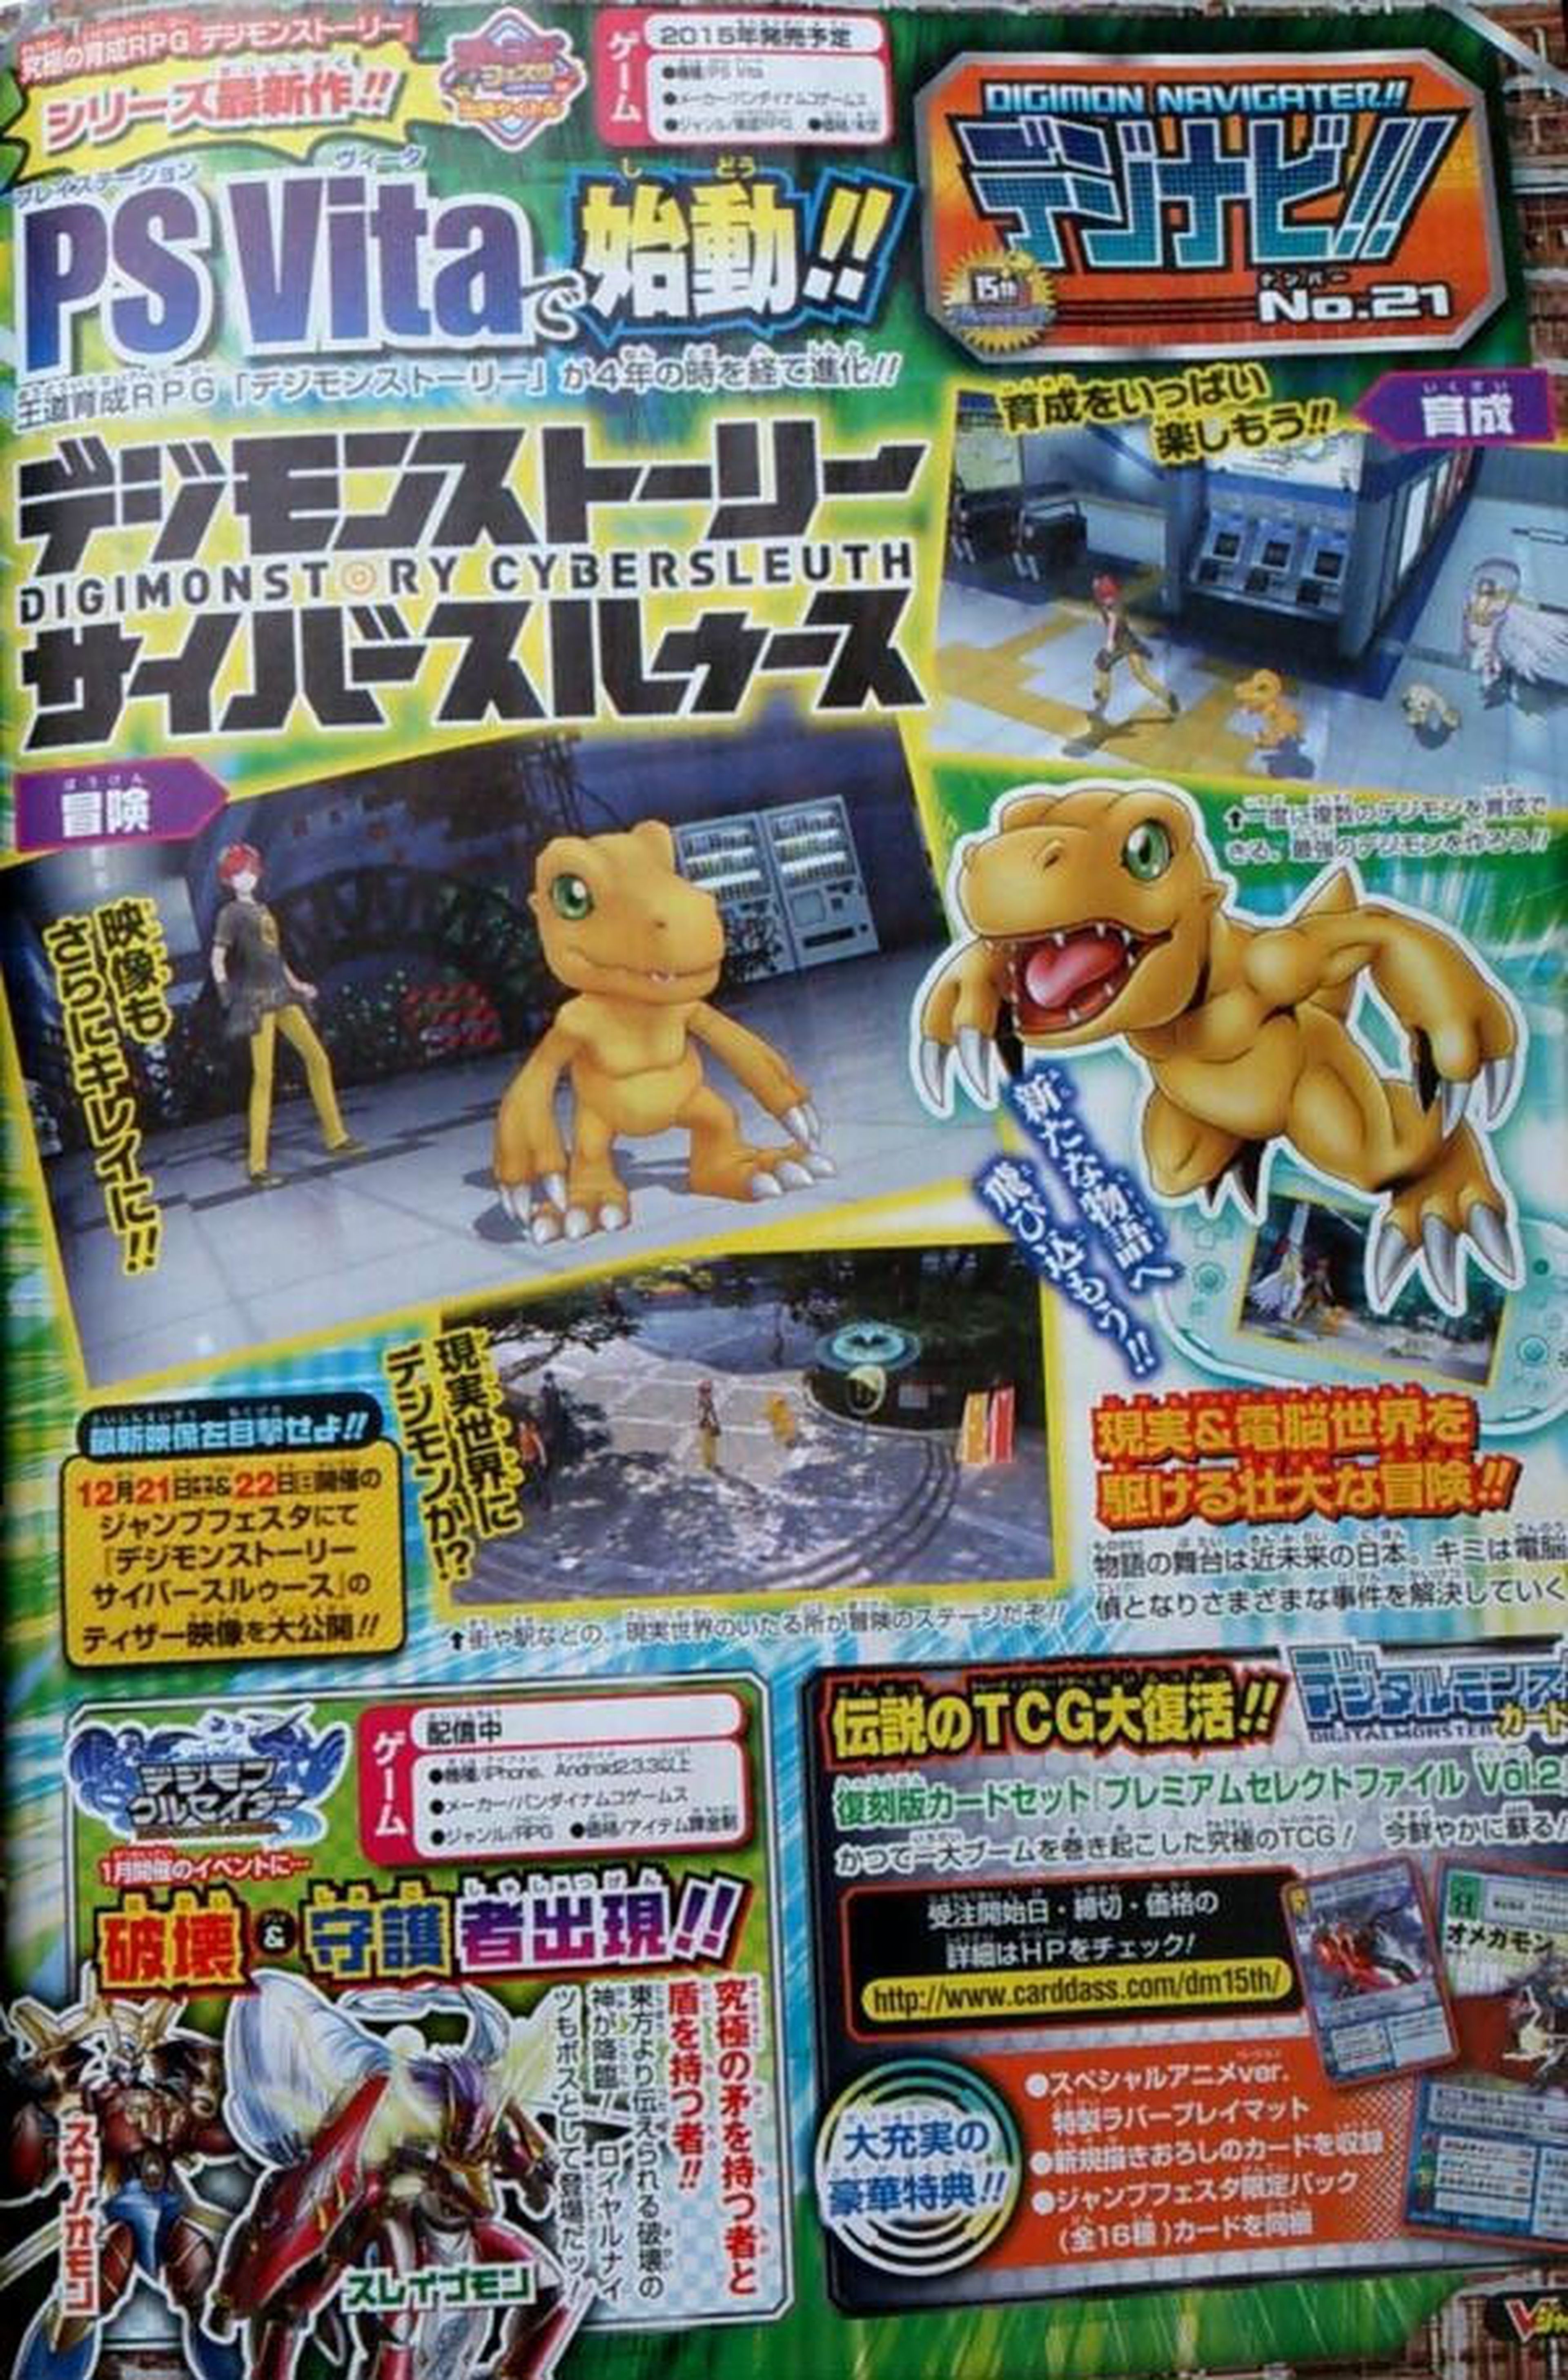 Primer scan de Digimon Story: Cyber Sleuth